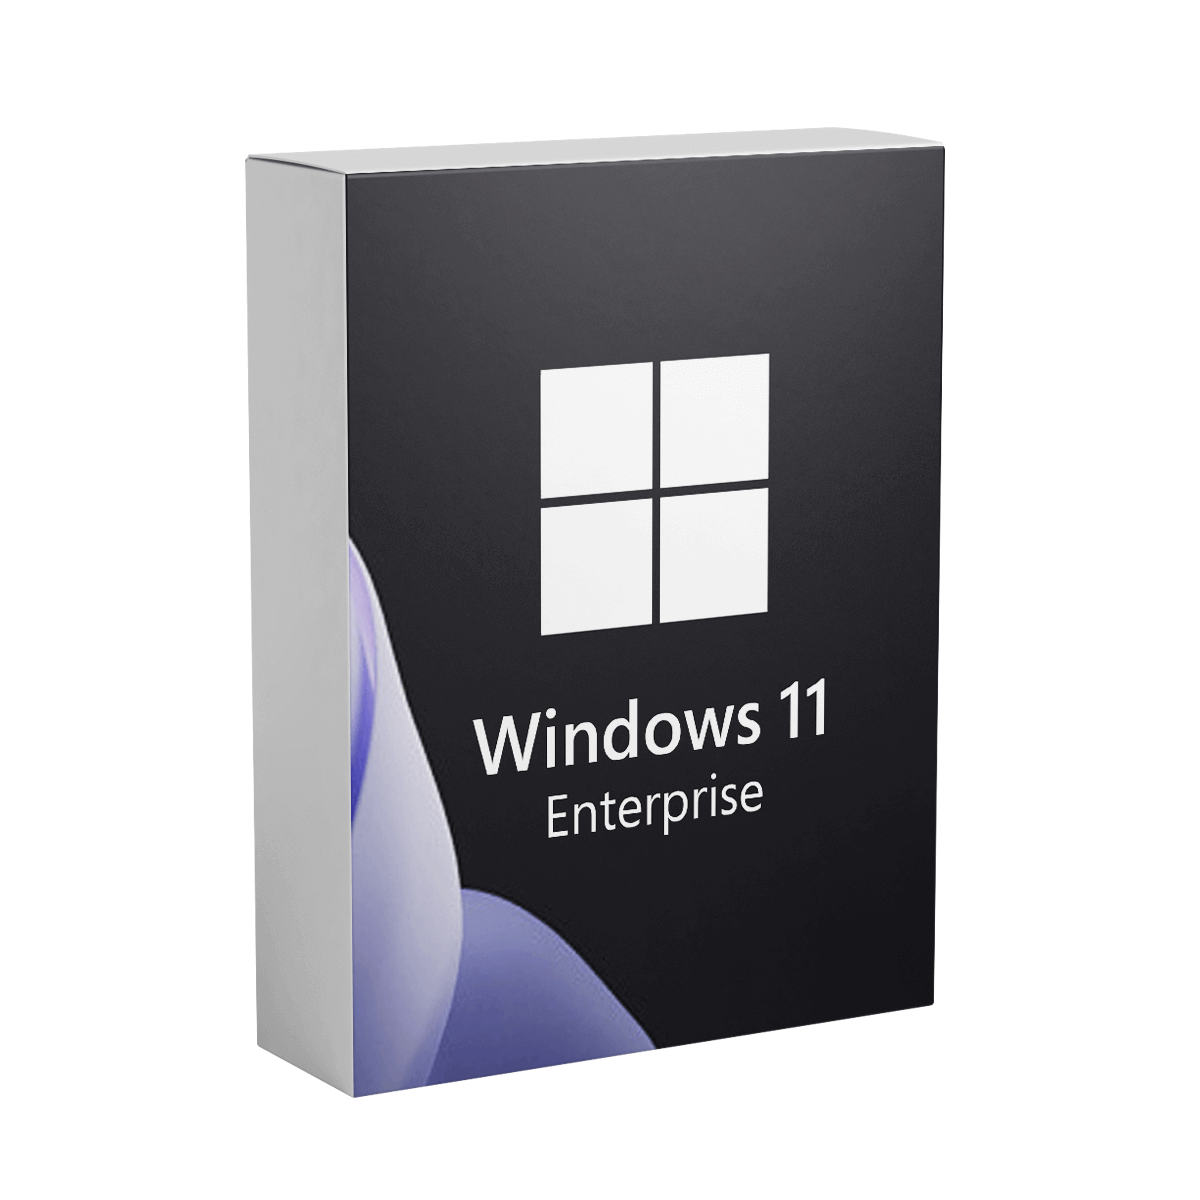 Windows 11 Enterprise - Lifetime License for 1 PC